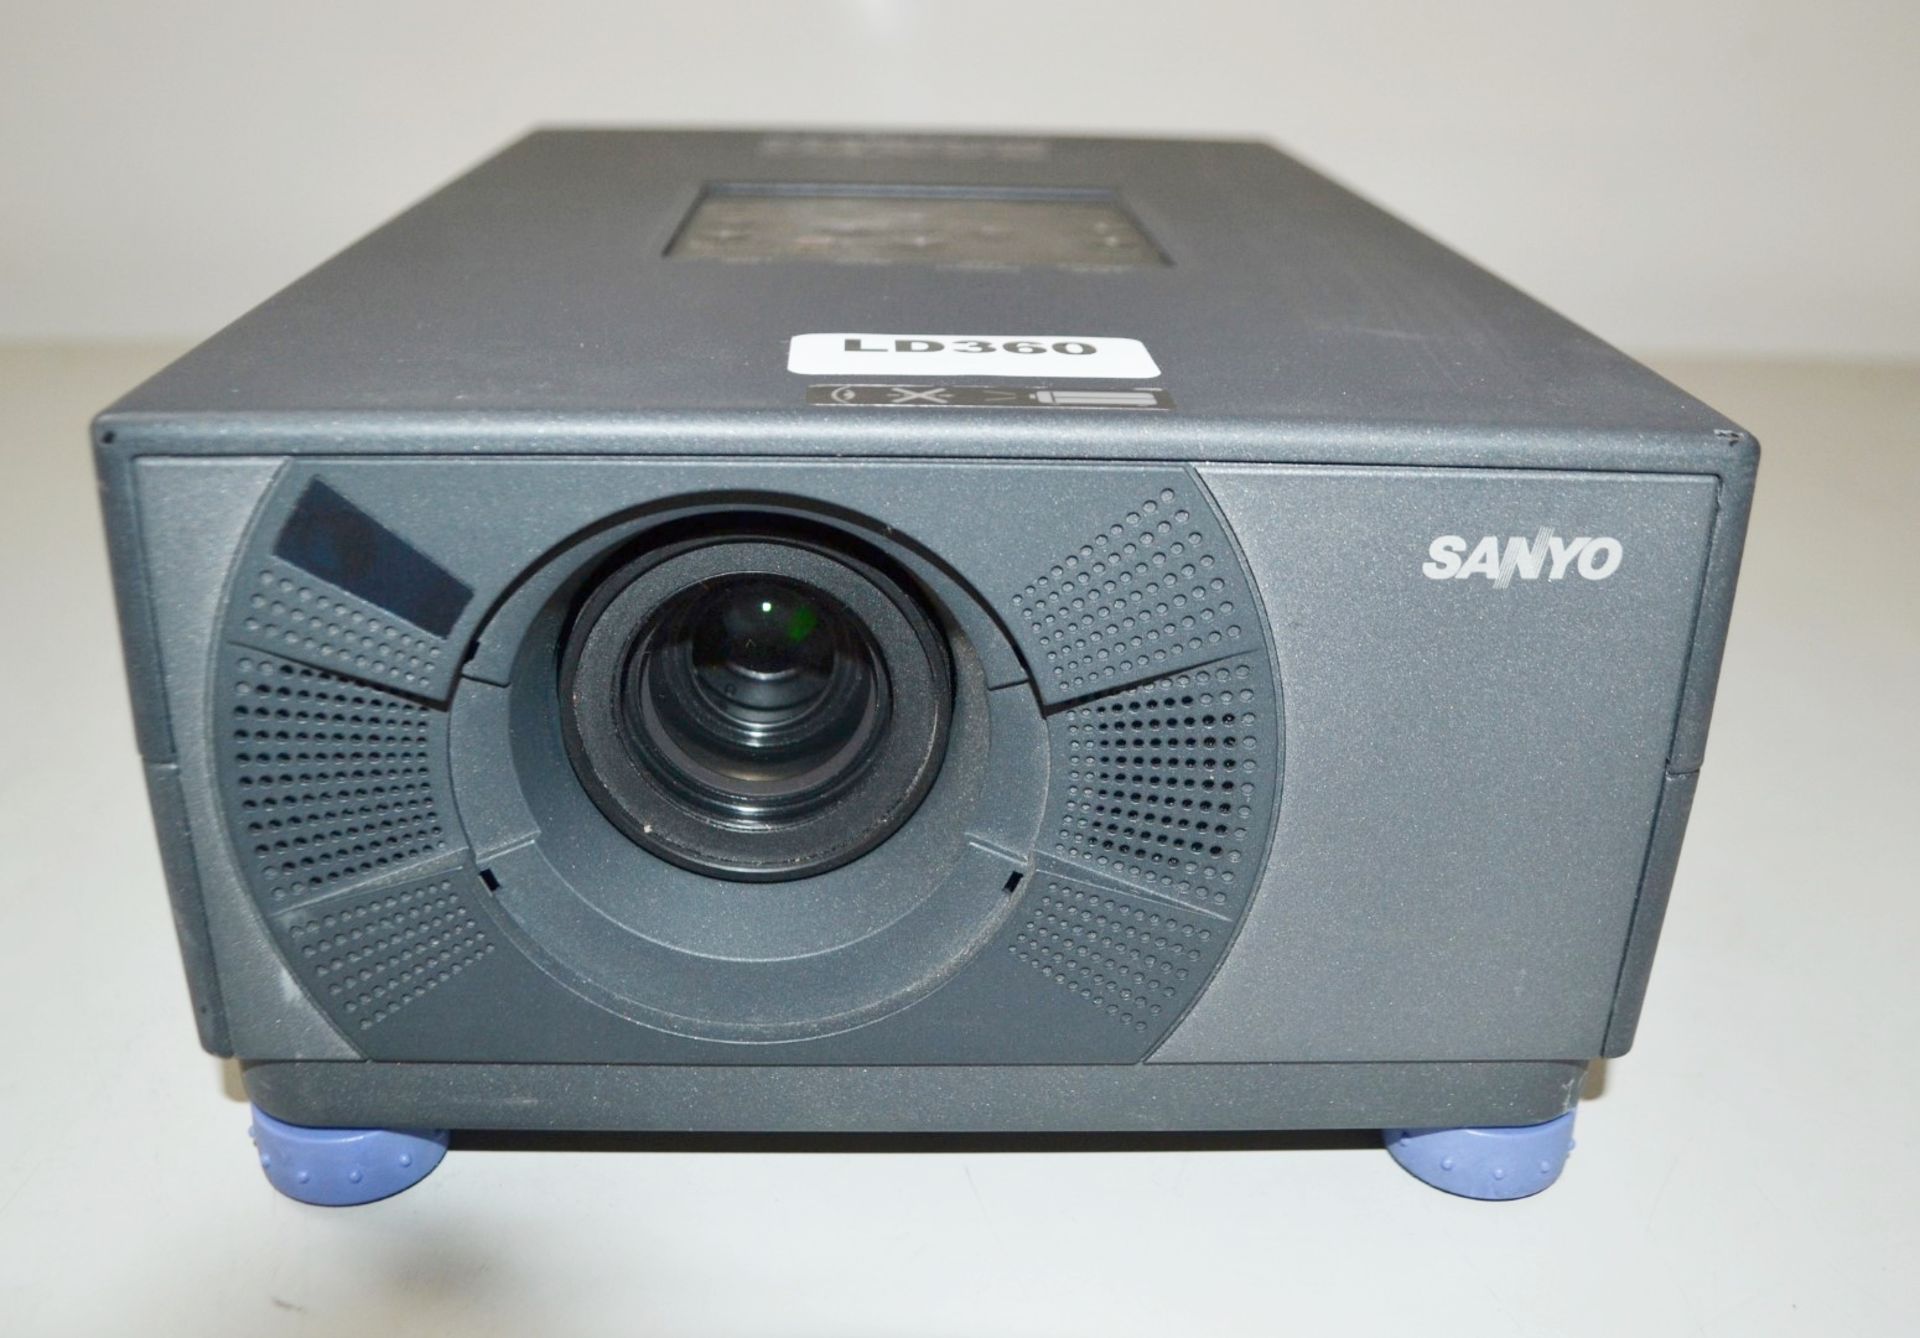 1 x Sanyo Multimedia Projector Pro X III - Ref: LD360 - CL409 - Altrincham WA14